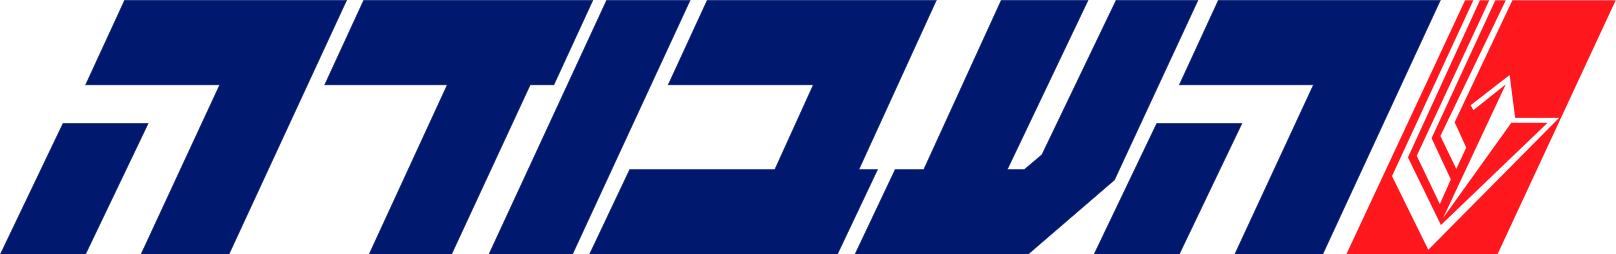 https://static.timesofisrael.com/www/uploads/2017/10/Logo_haAwoda.svg_.png